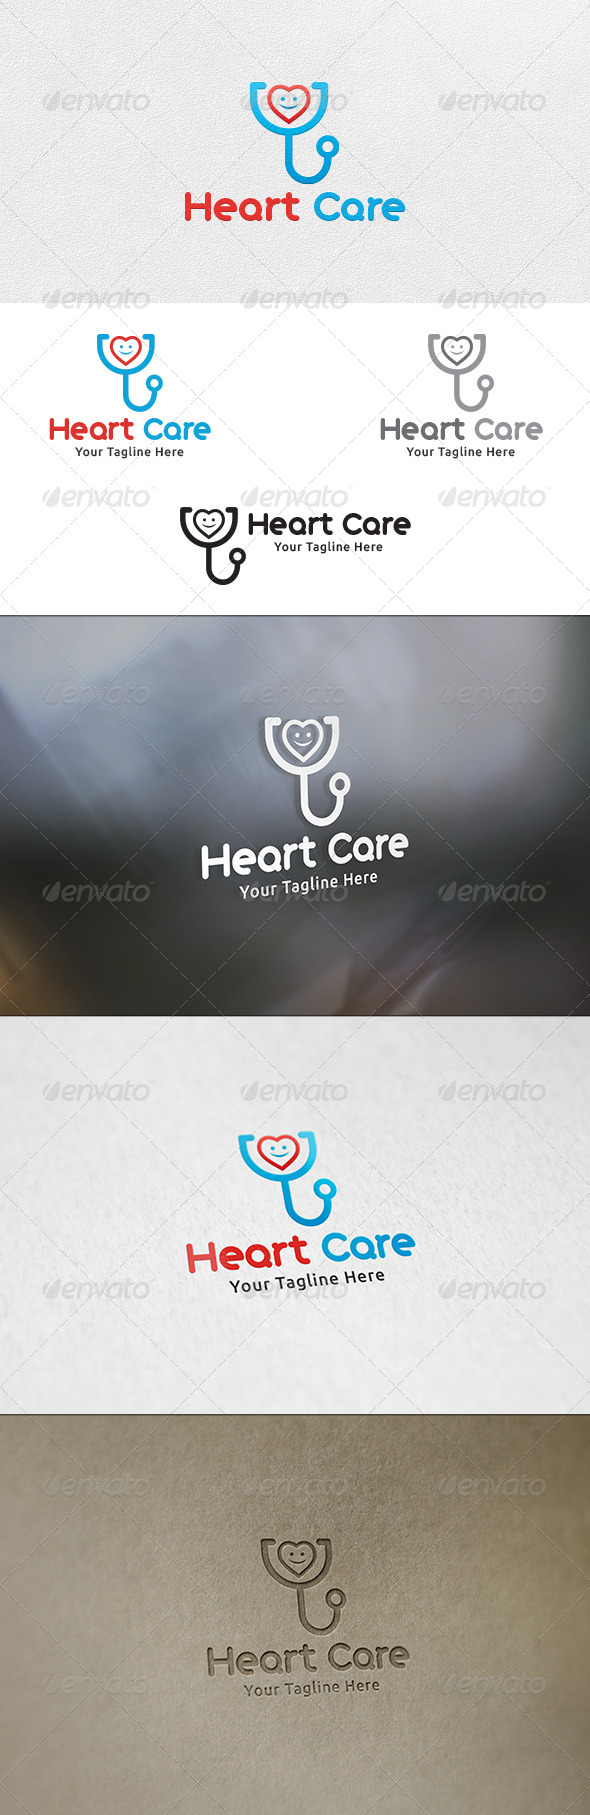 Heart Care - Logo Template